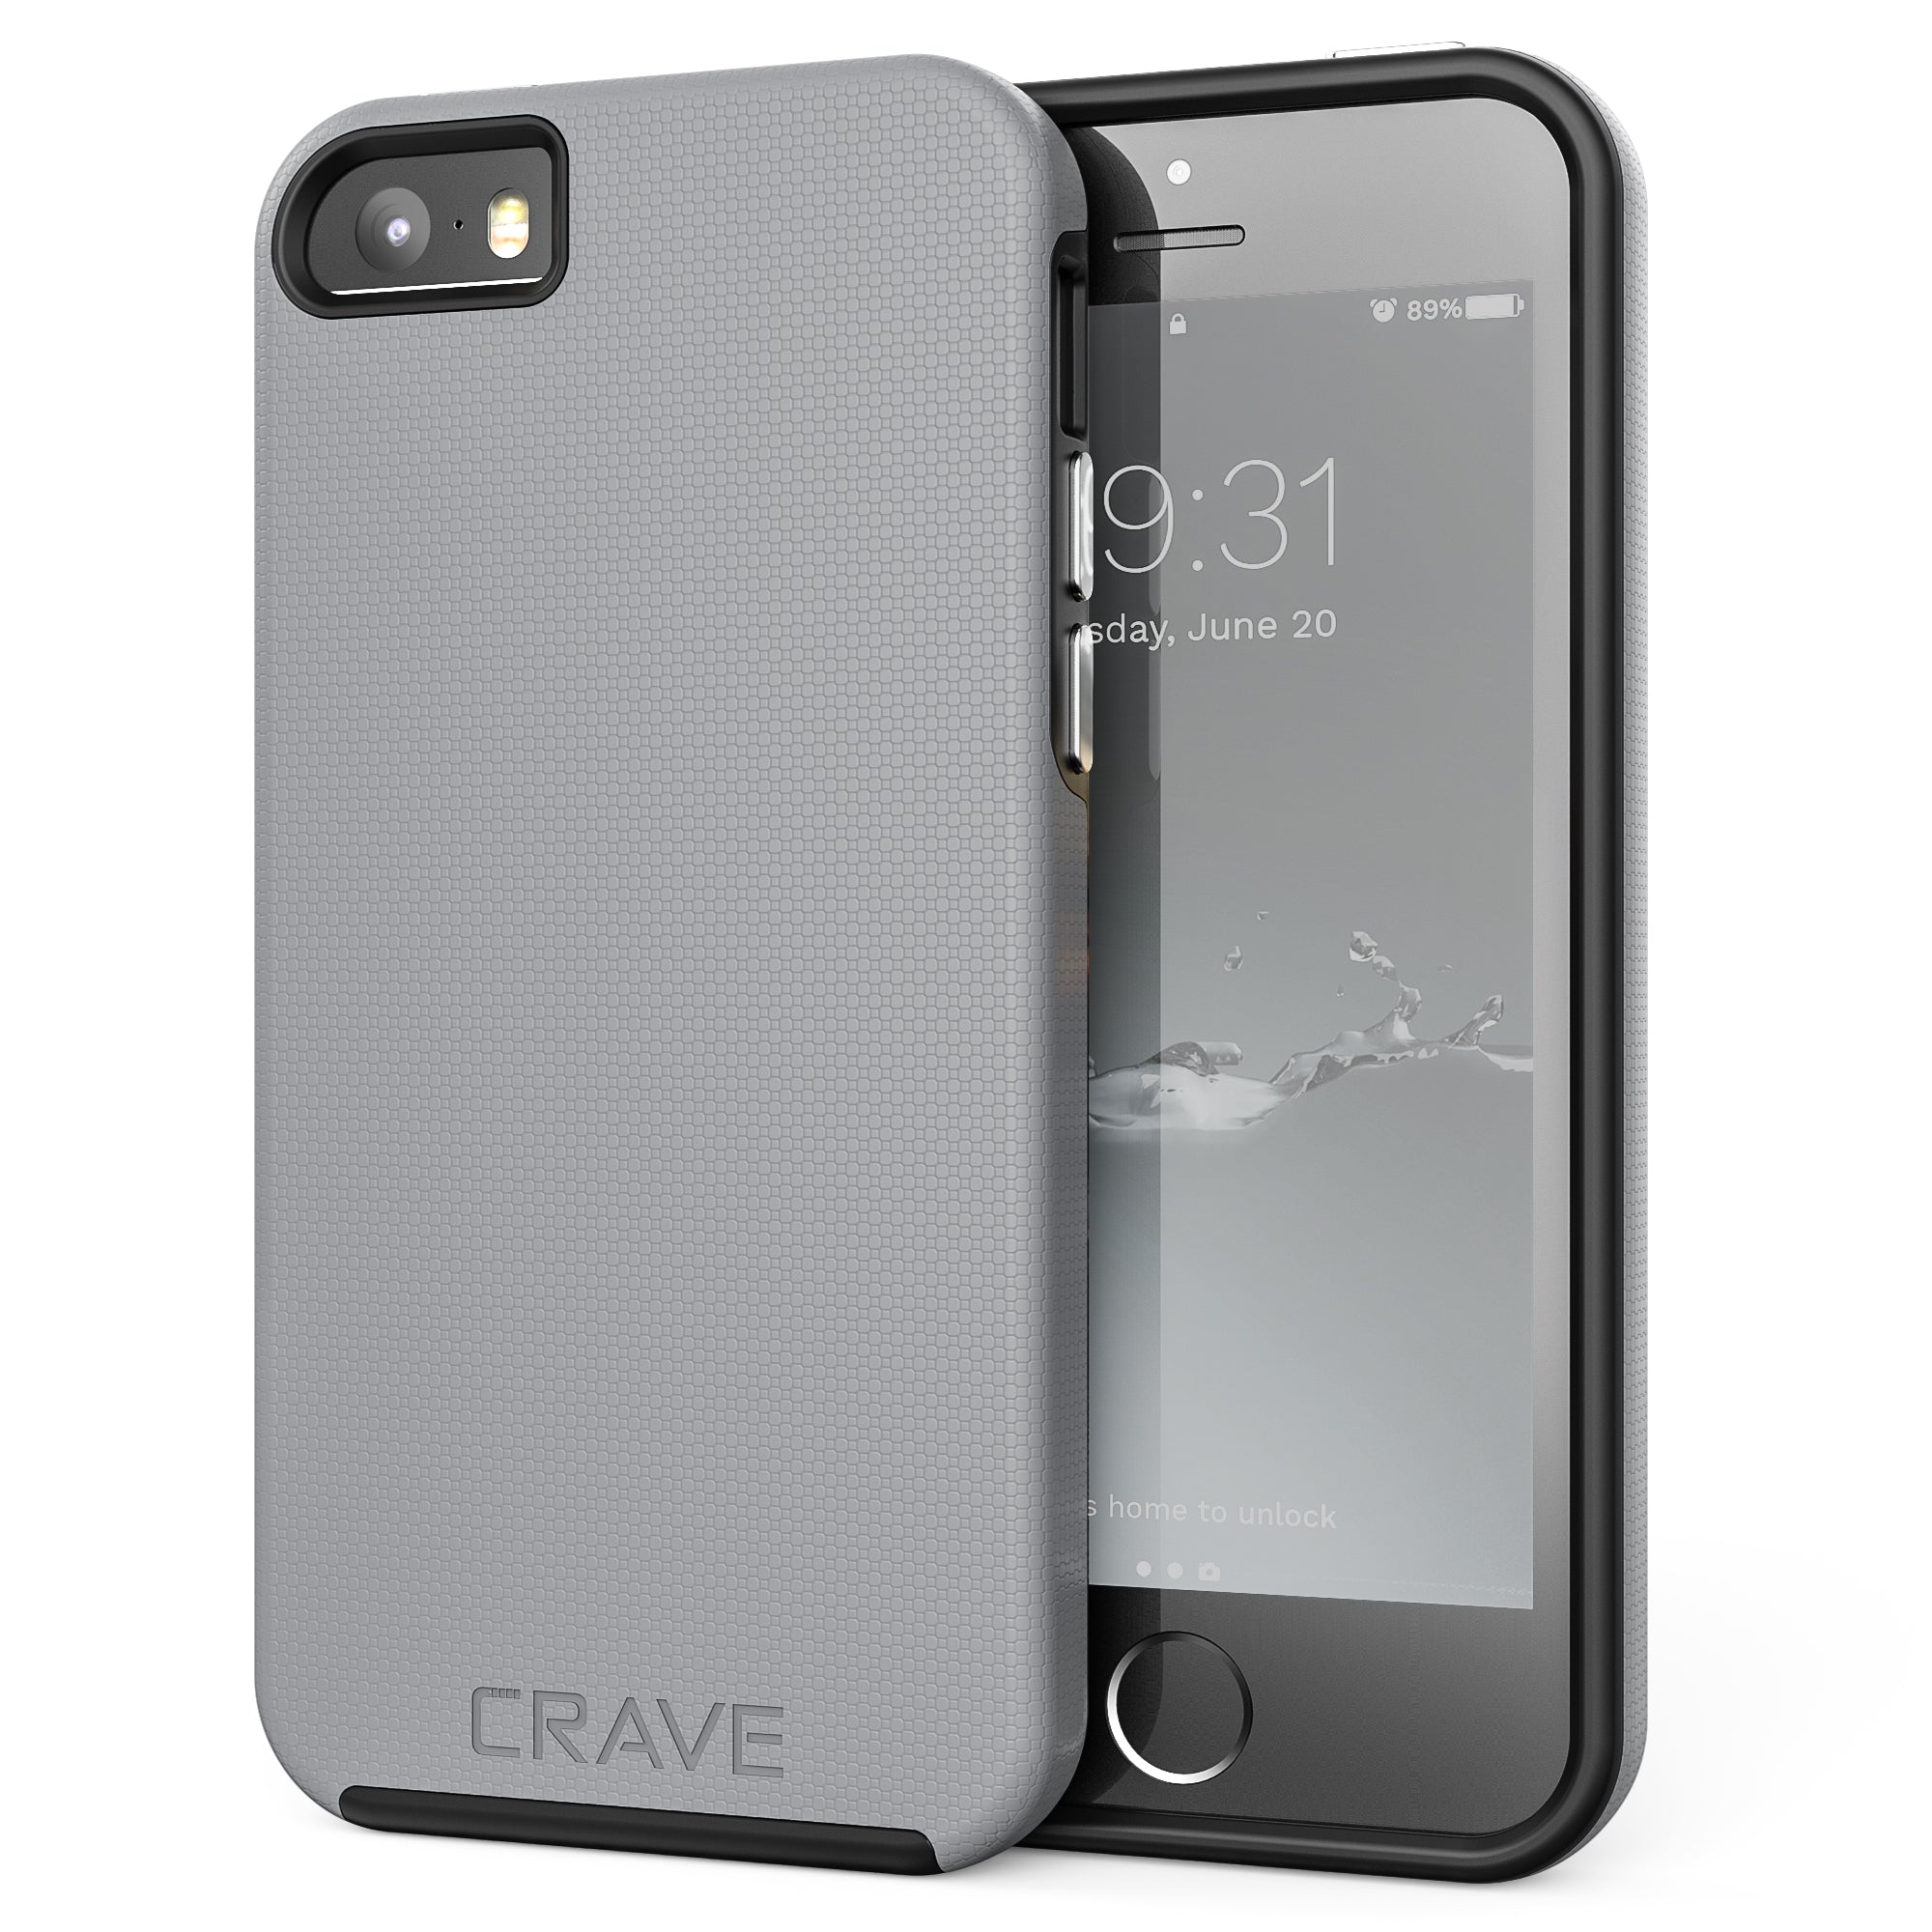 iPhone 5 | 5s | SE Case Dual Guard